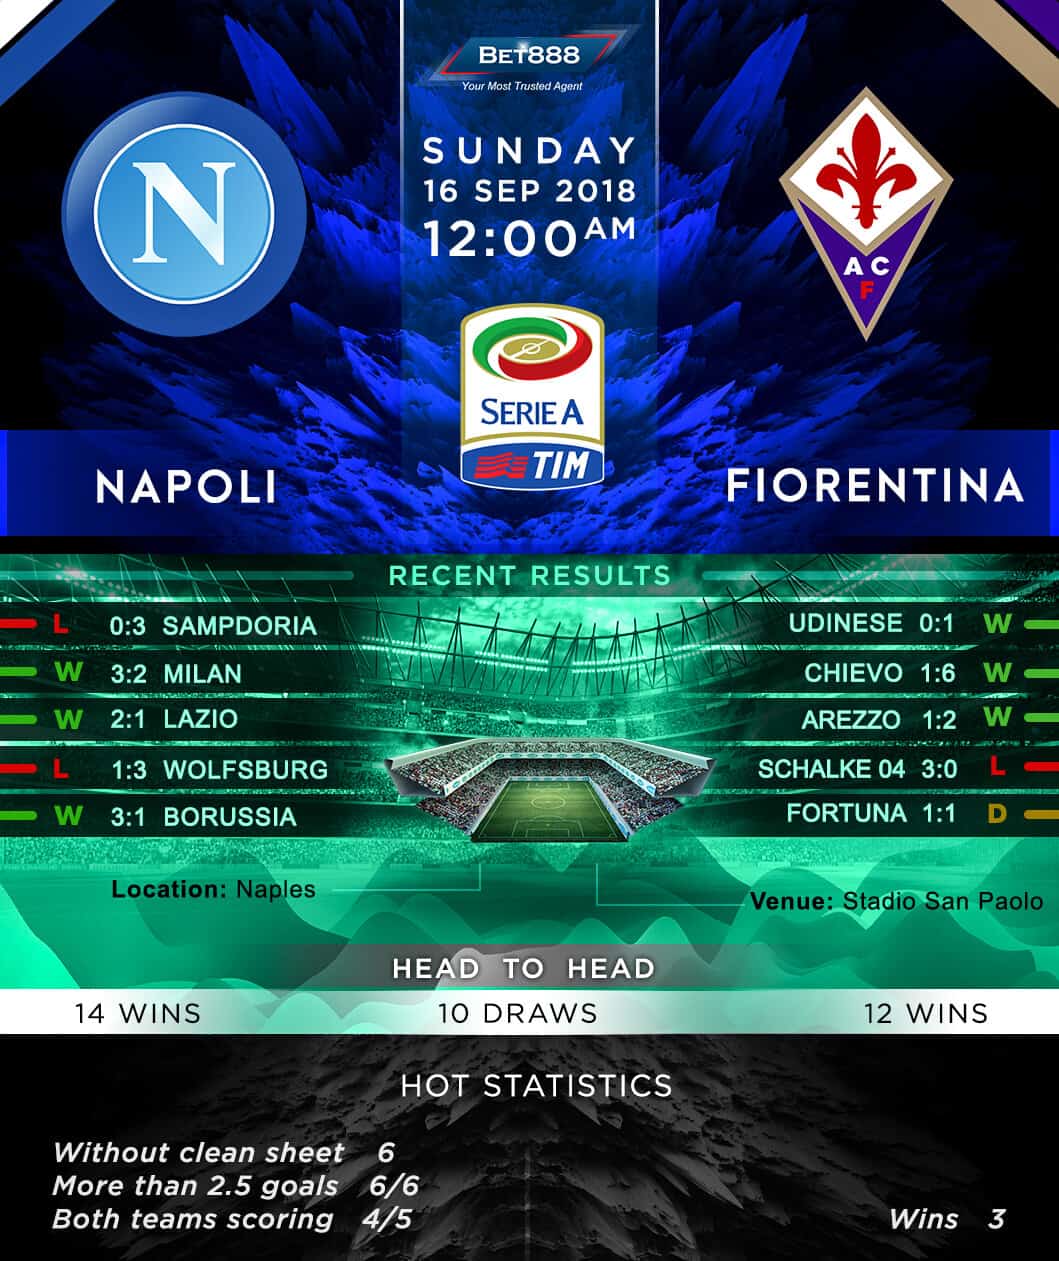 Napoli vs Fiorentina 16/09/18